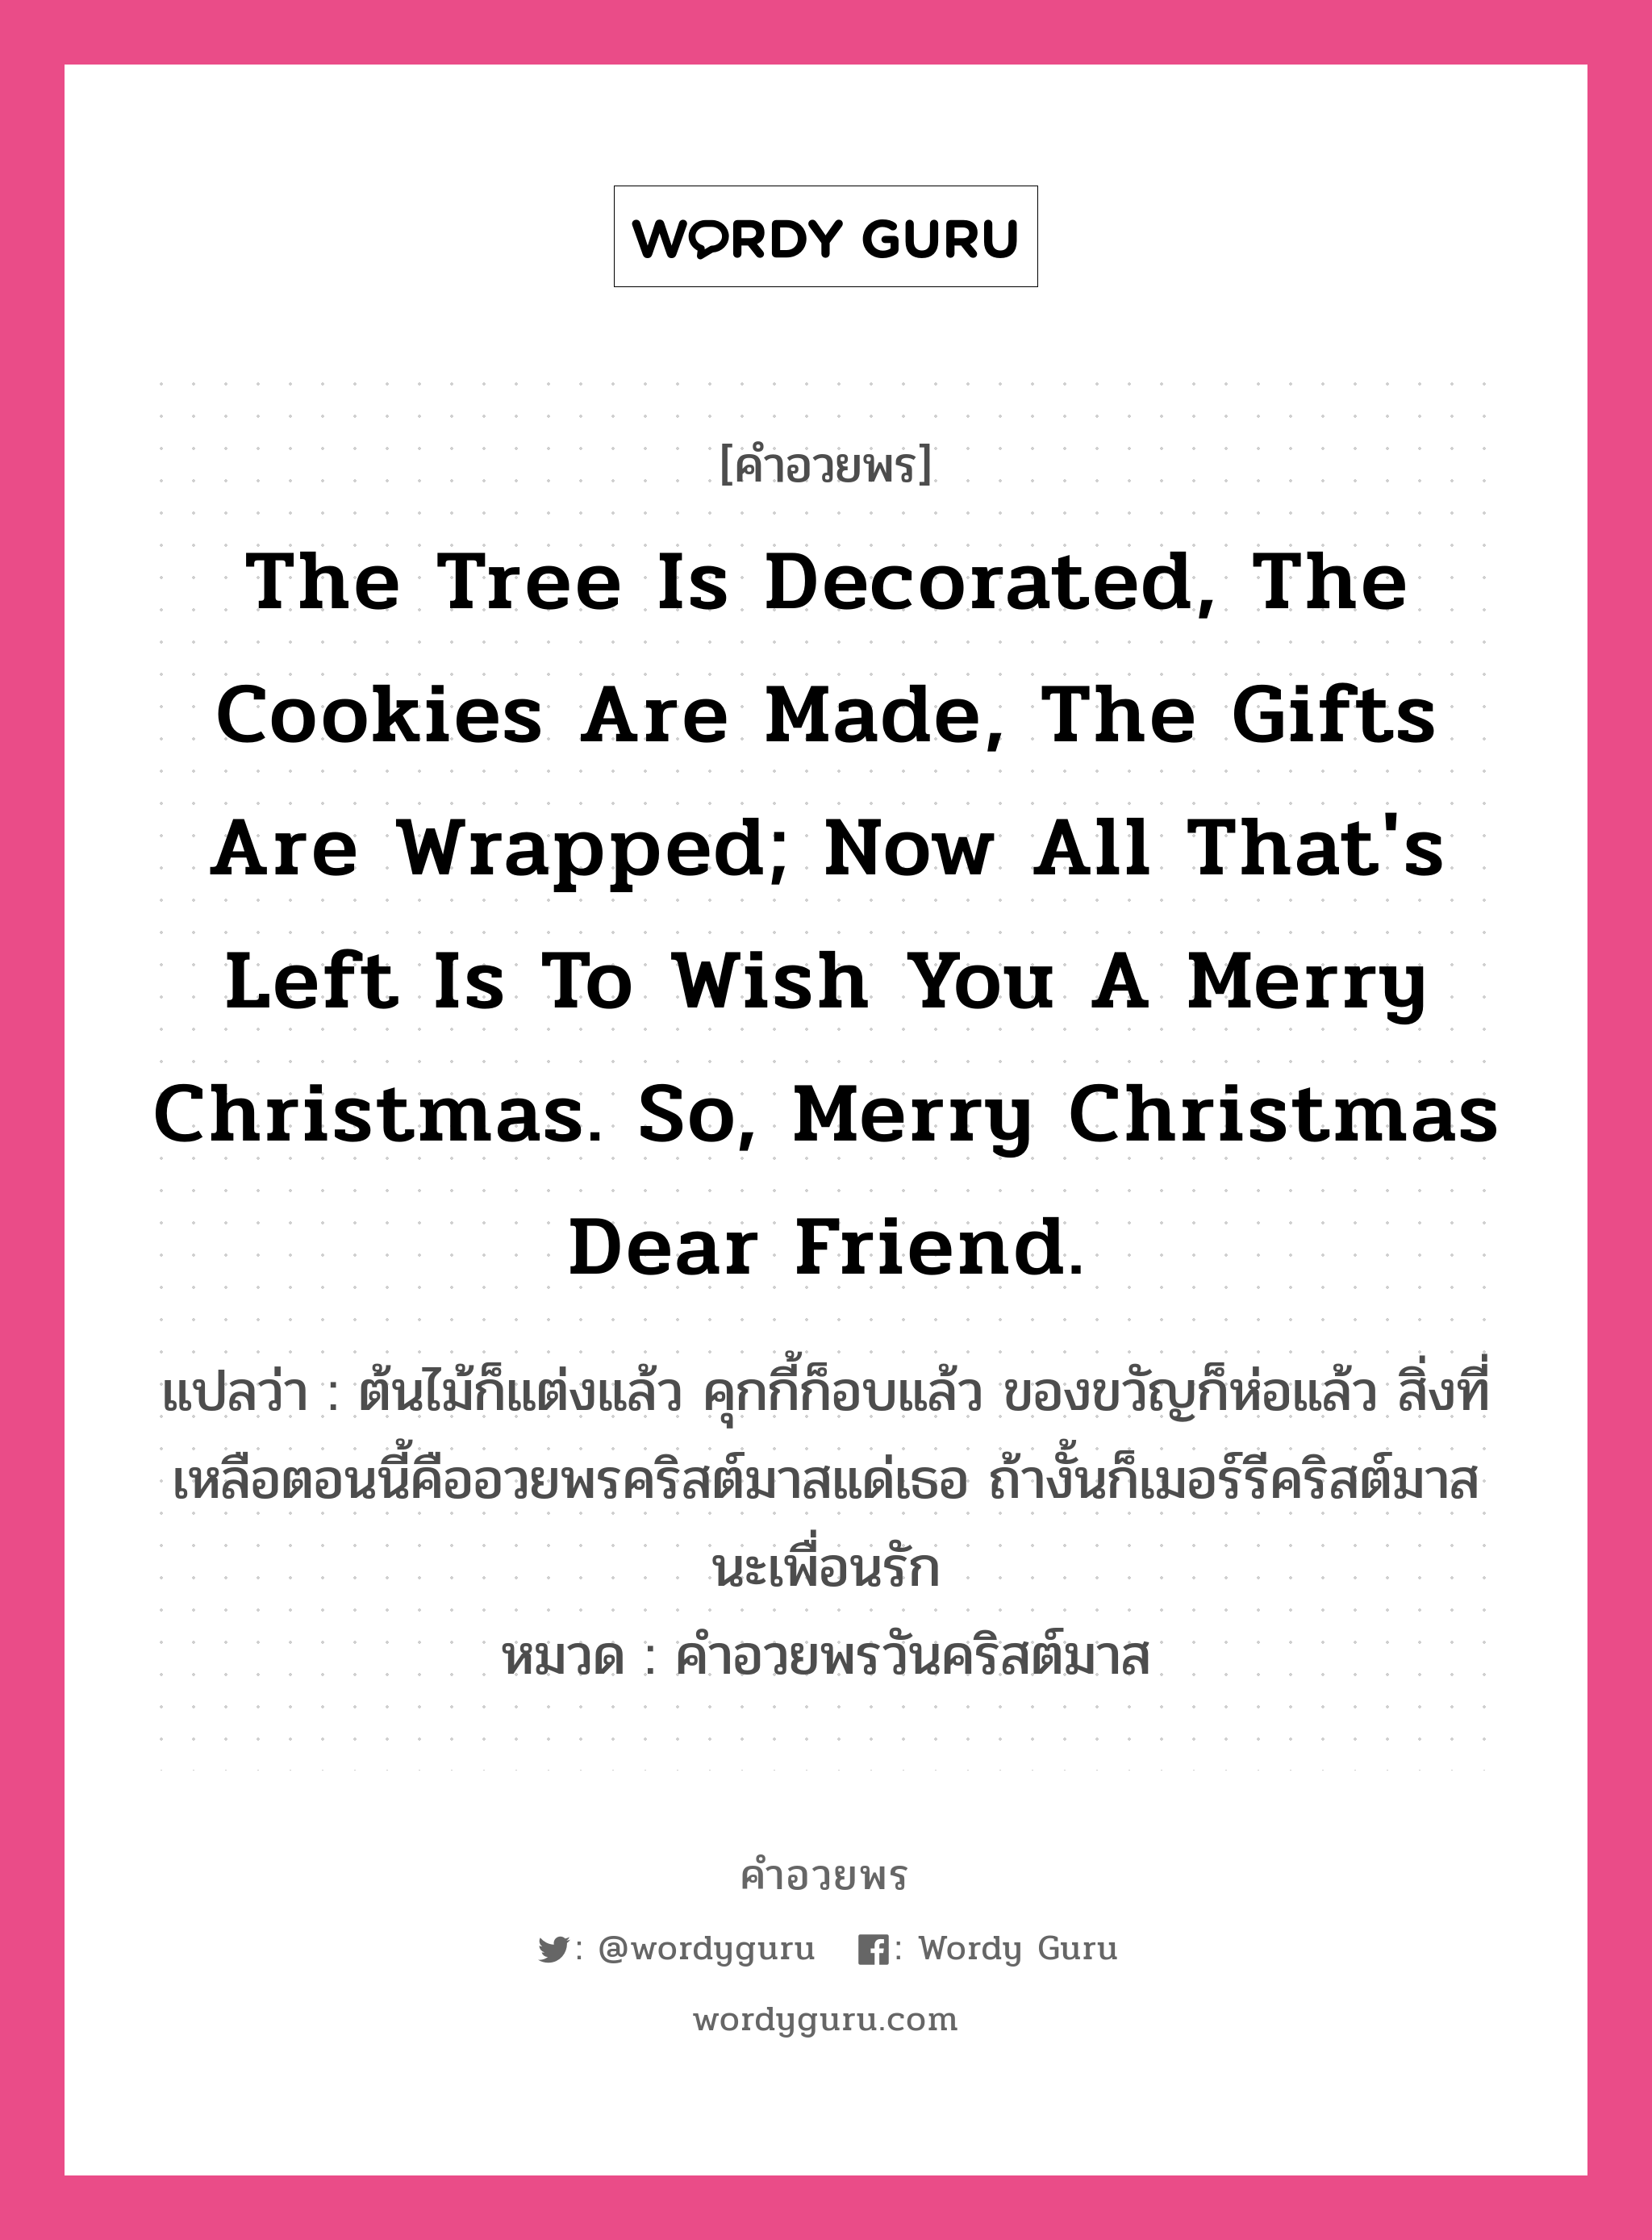 The tree is decorated, the cookies are made, the gifts are wrapped; now all that's left is to wish you a Merry Christmas. So, Merry Christmas dear friend. คำศัพท์ในกลุ่มประเภท คำอวยพรวันคริสต์มาส, แปลว่า ต้นไม้ก็แต่งแล้ว คุกกี้ก็อบแล้ว ของขวัญก็ห่อแล้ว สิ่งที่เหลือตอนนี้คืออวยพรคริสต์มาสแด่เธอ ถ้างั้นก็เมอร์รีคริสต์มาสนะเพื่อนรัก หมวด คำอวยพรวันคริสต์มาส หมวด คำอวยพรวันคริสต์มาส